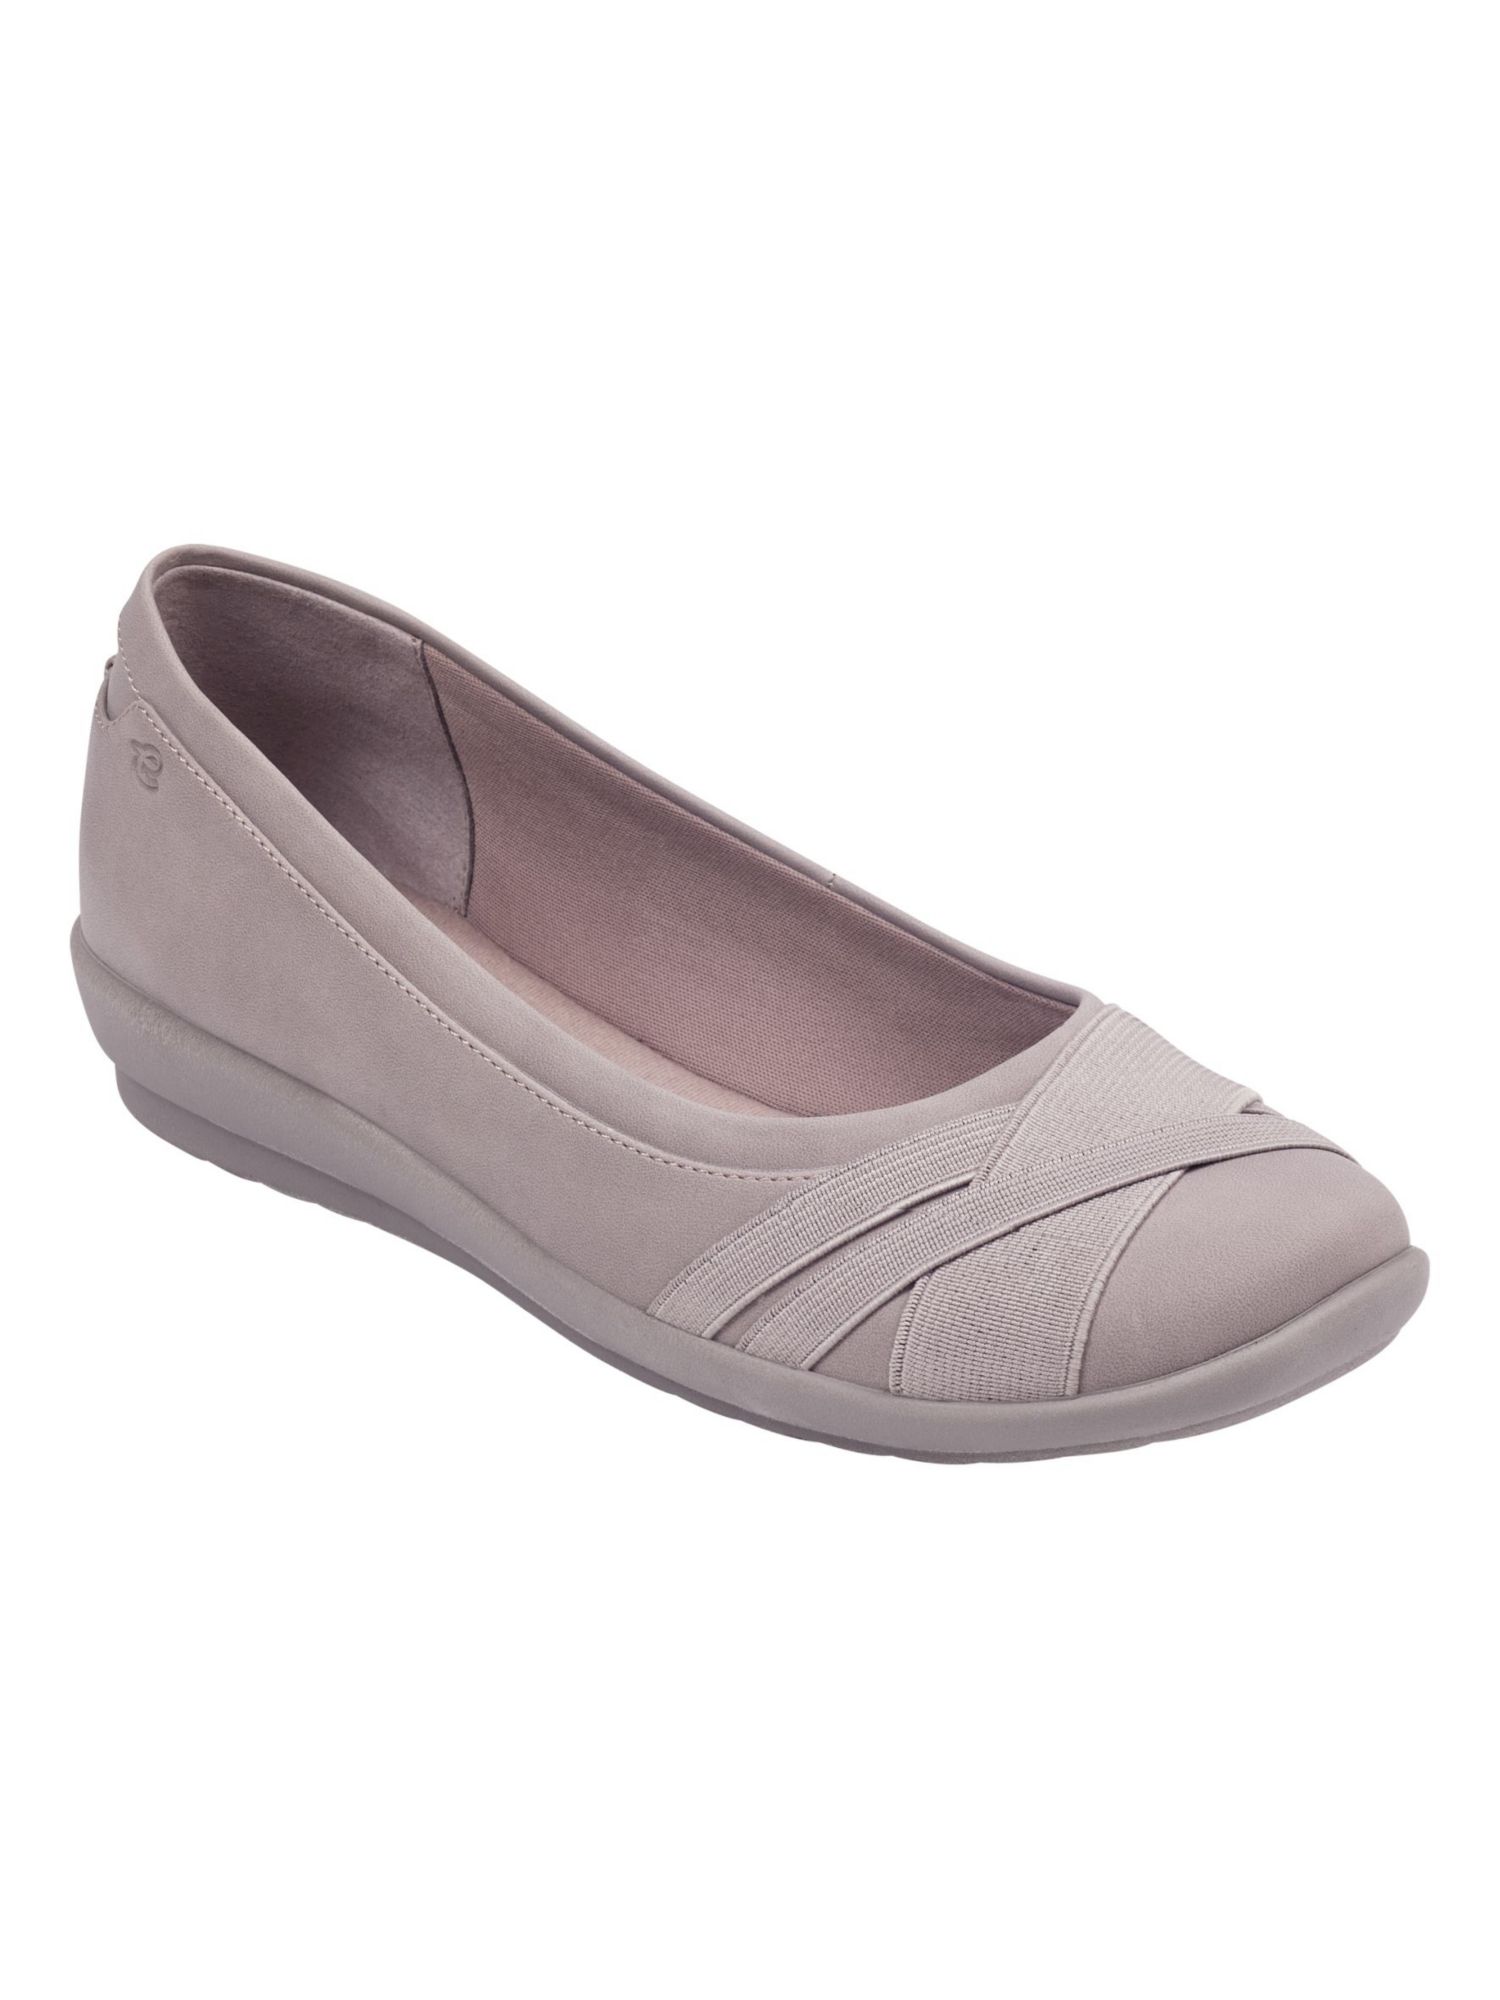 EASY SPIRIT Womens Beige Cushioned Acasia Round Toe Slip On Flats Shoes 10 W